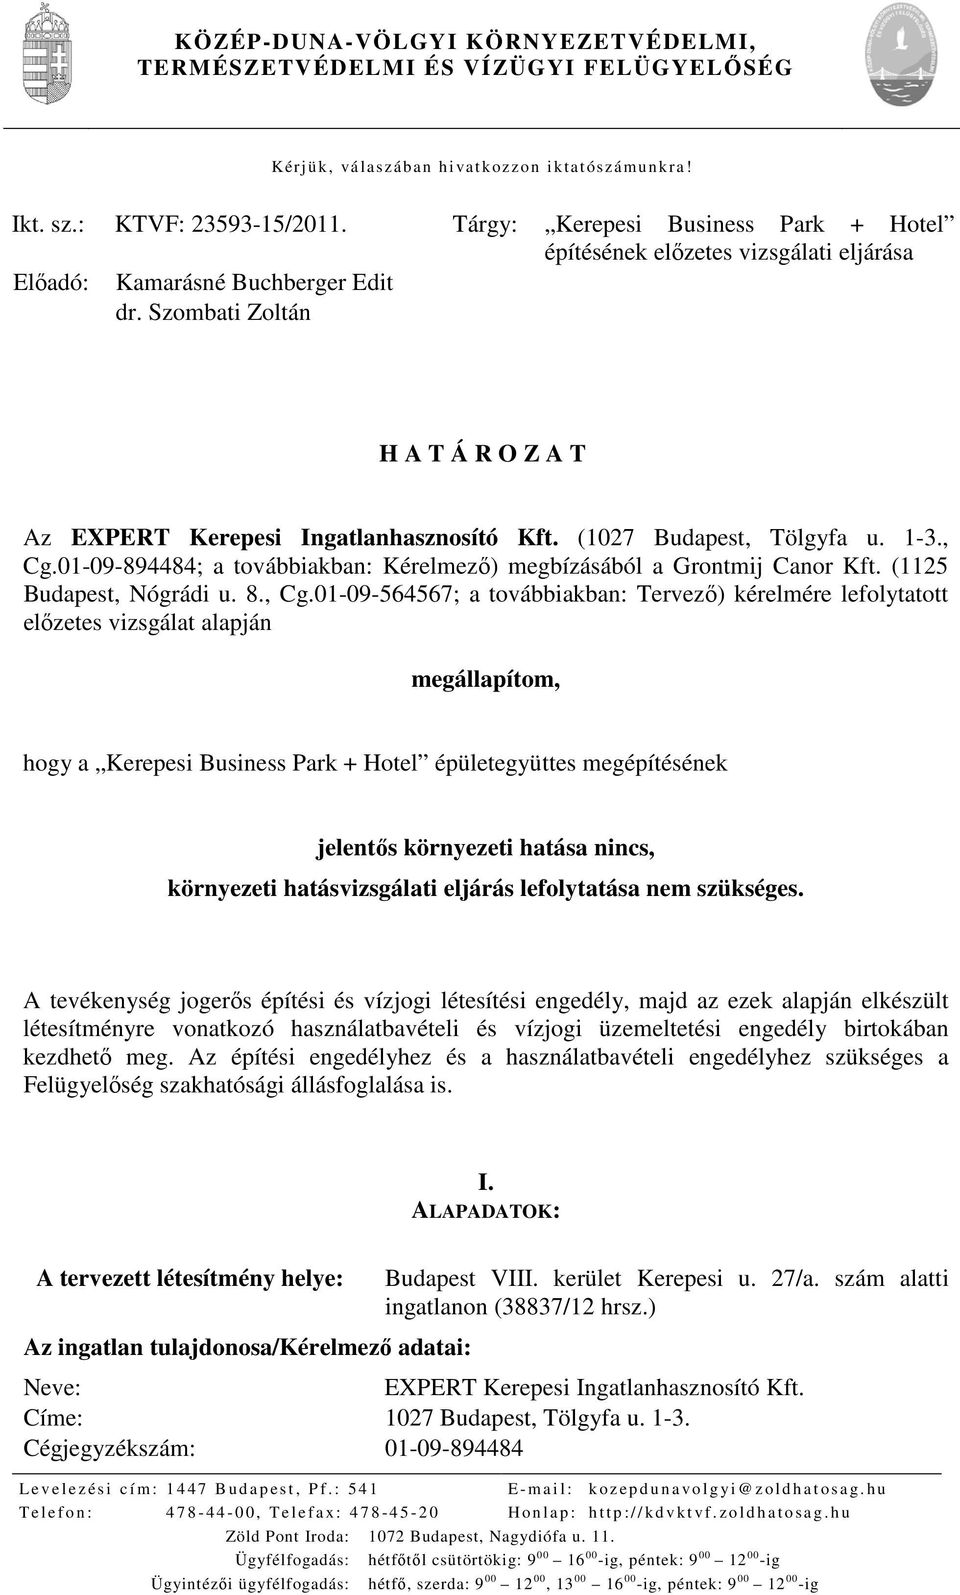 (1027 Budapest, Tölgyfa u. 1-3., Cg.